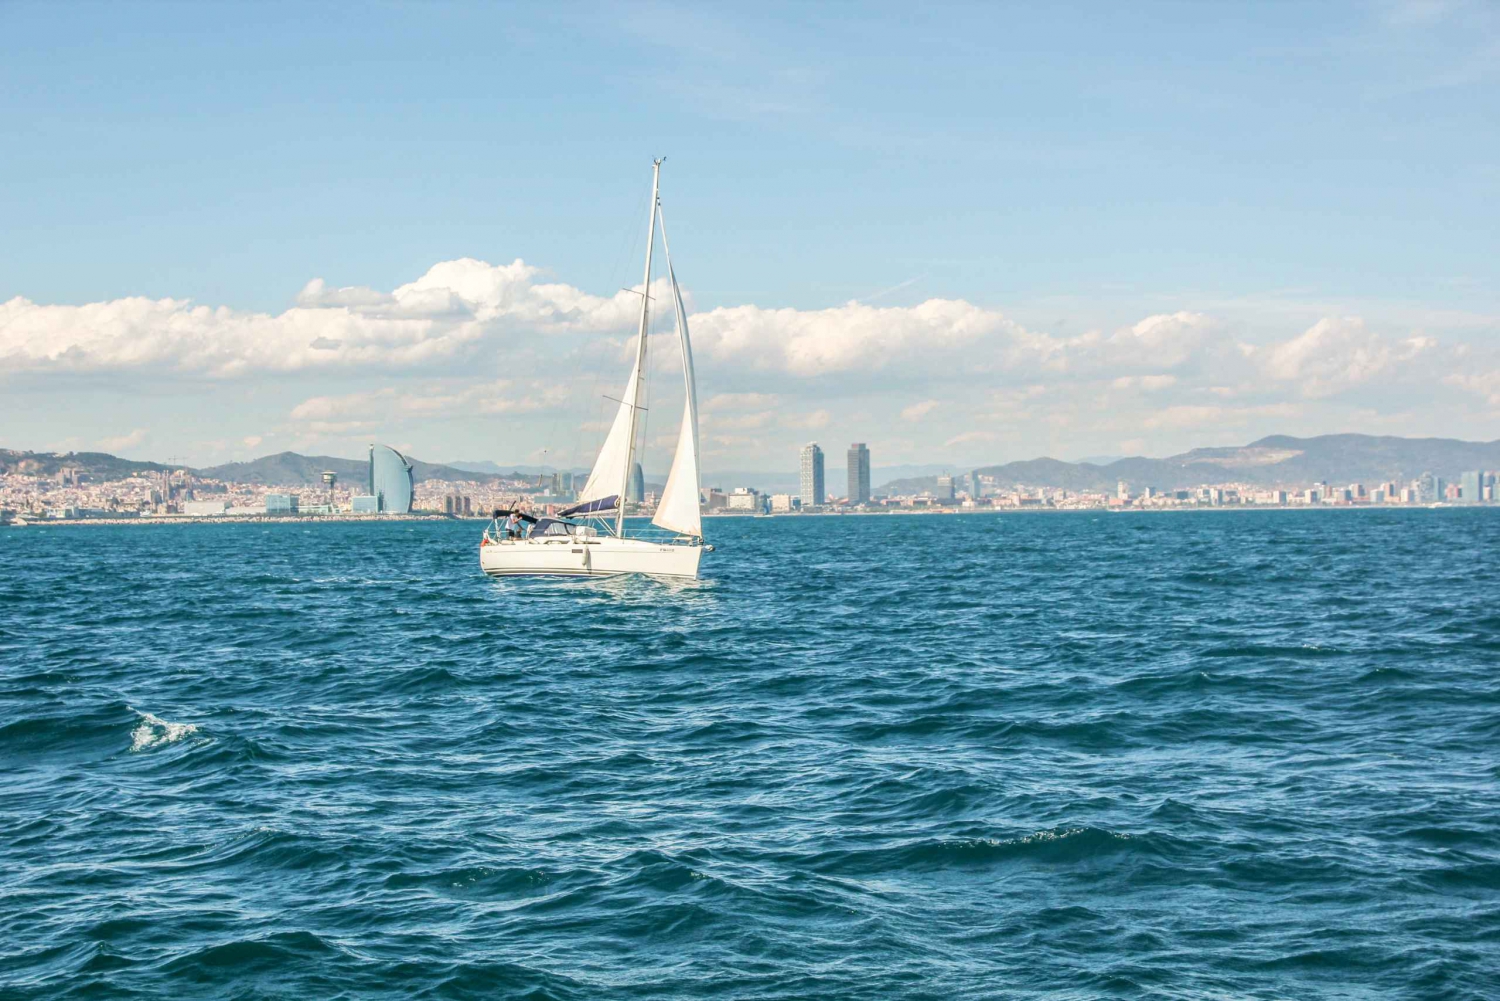 Barcelona Port Vell: Afternoon Merienda Sailing Cruise